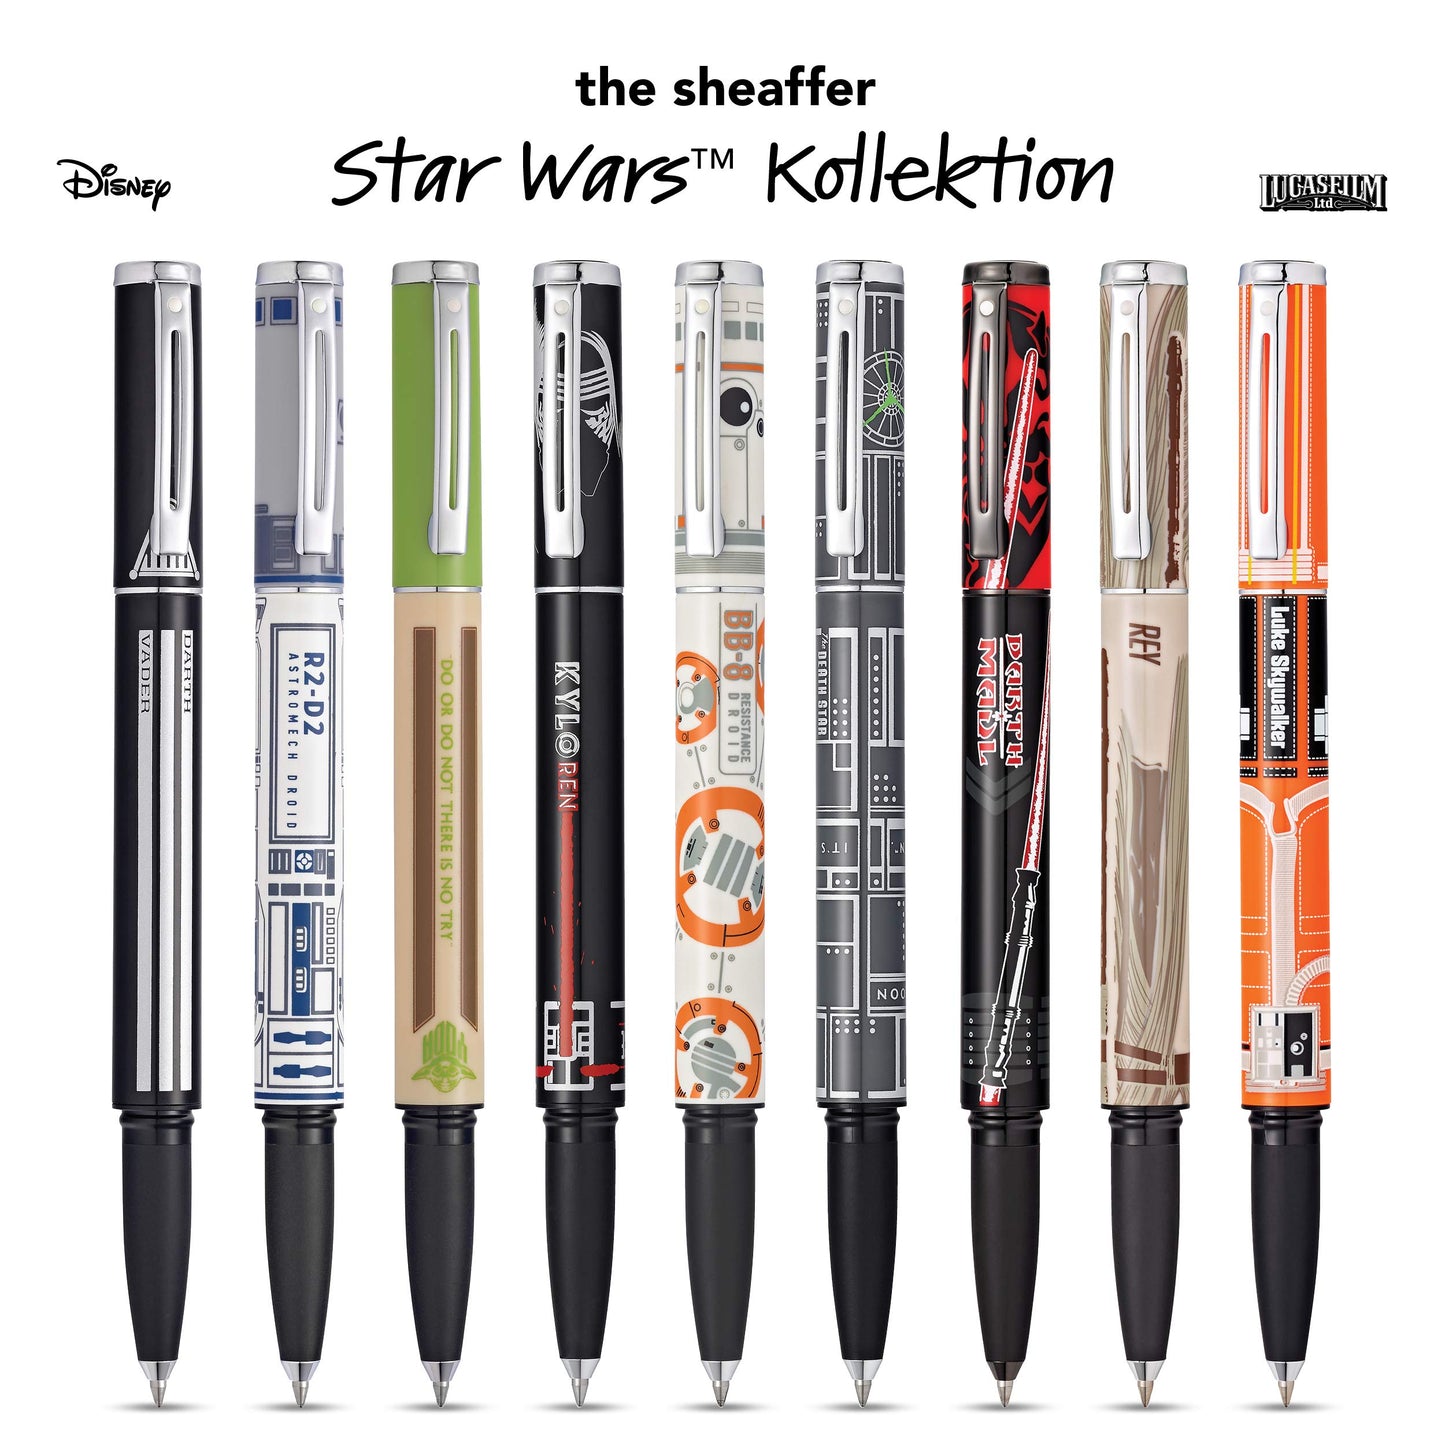 Sheaffer Pop Star Wars Darth Vader with Chrome Trim Gel Rollerball Pen